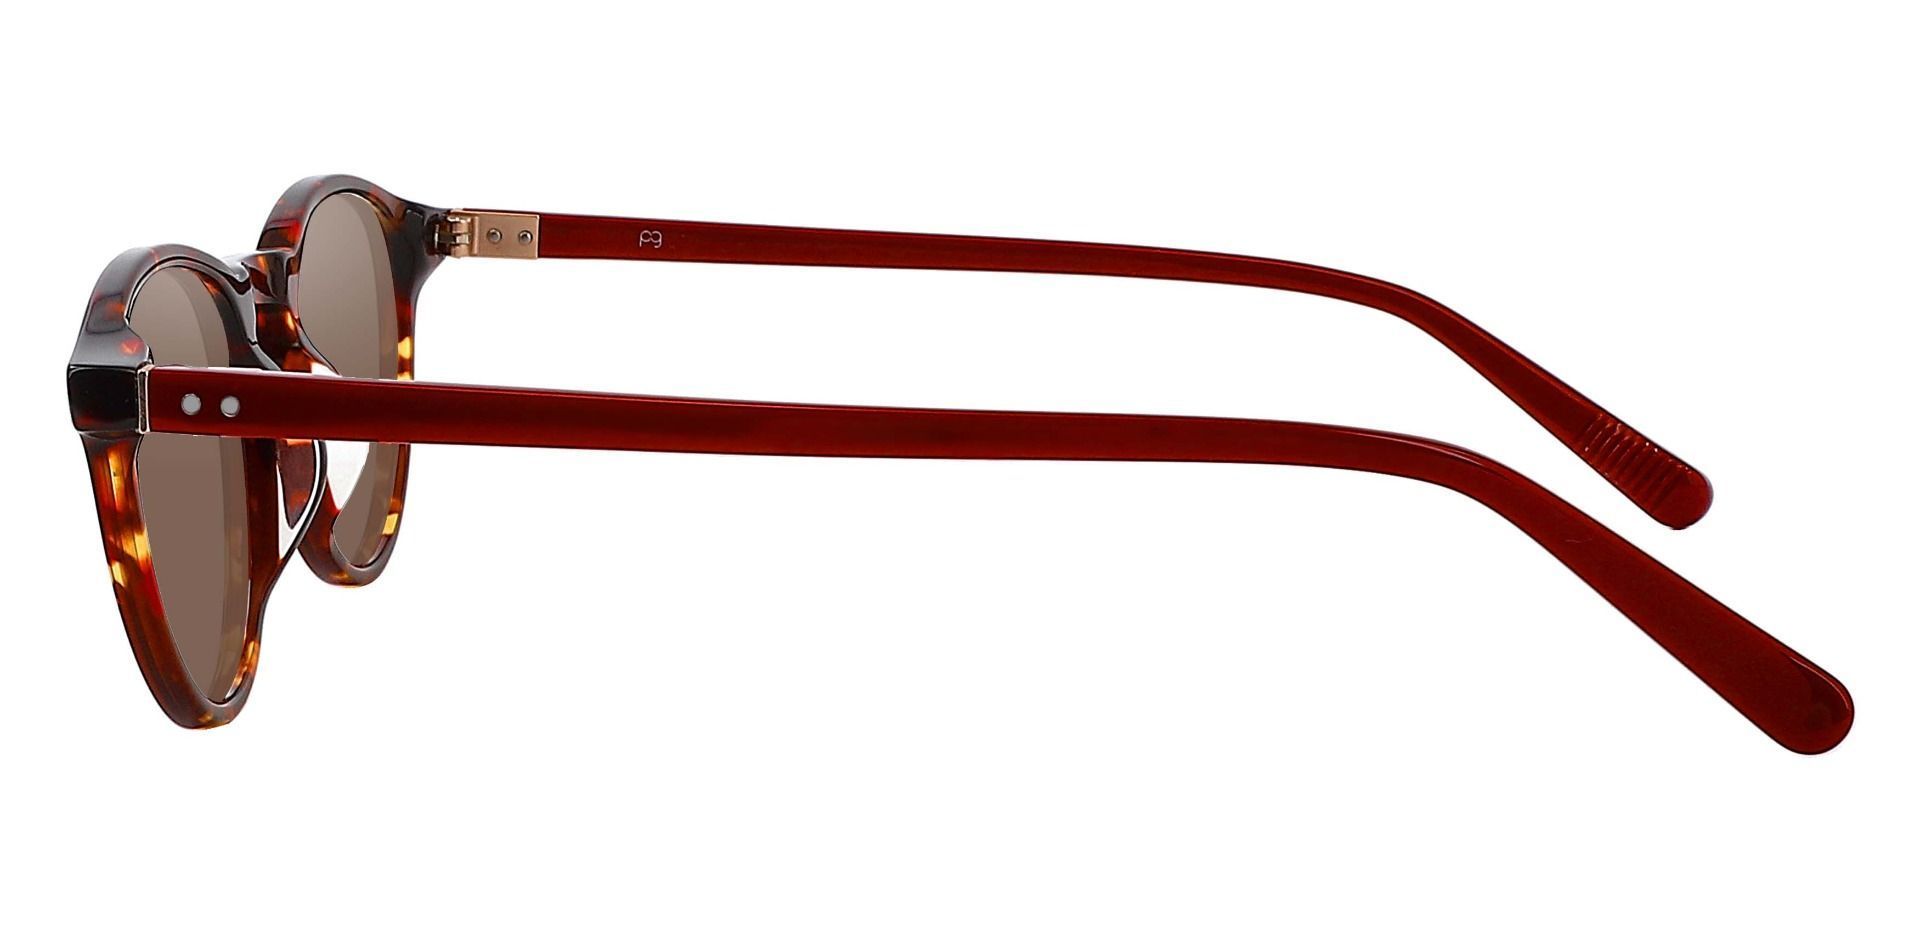 Monarch Oval Prescription Sunglasses - Tortoise Frame With Brown Lenses